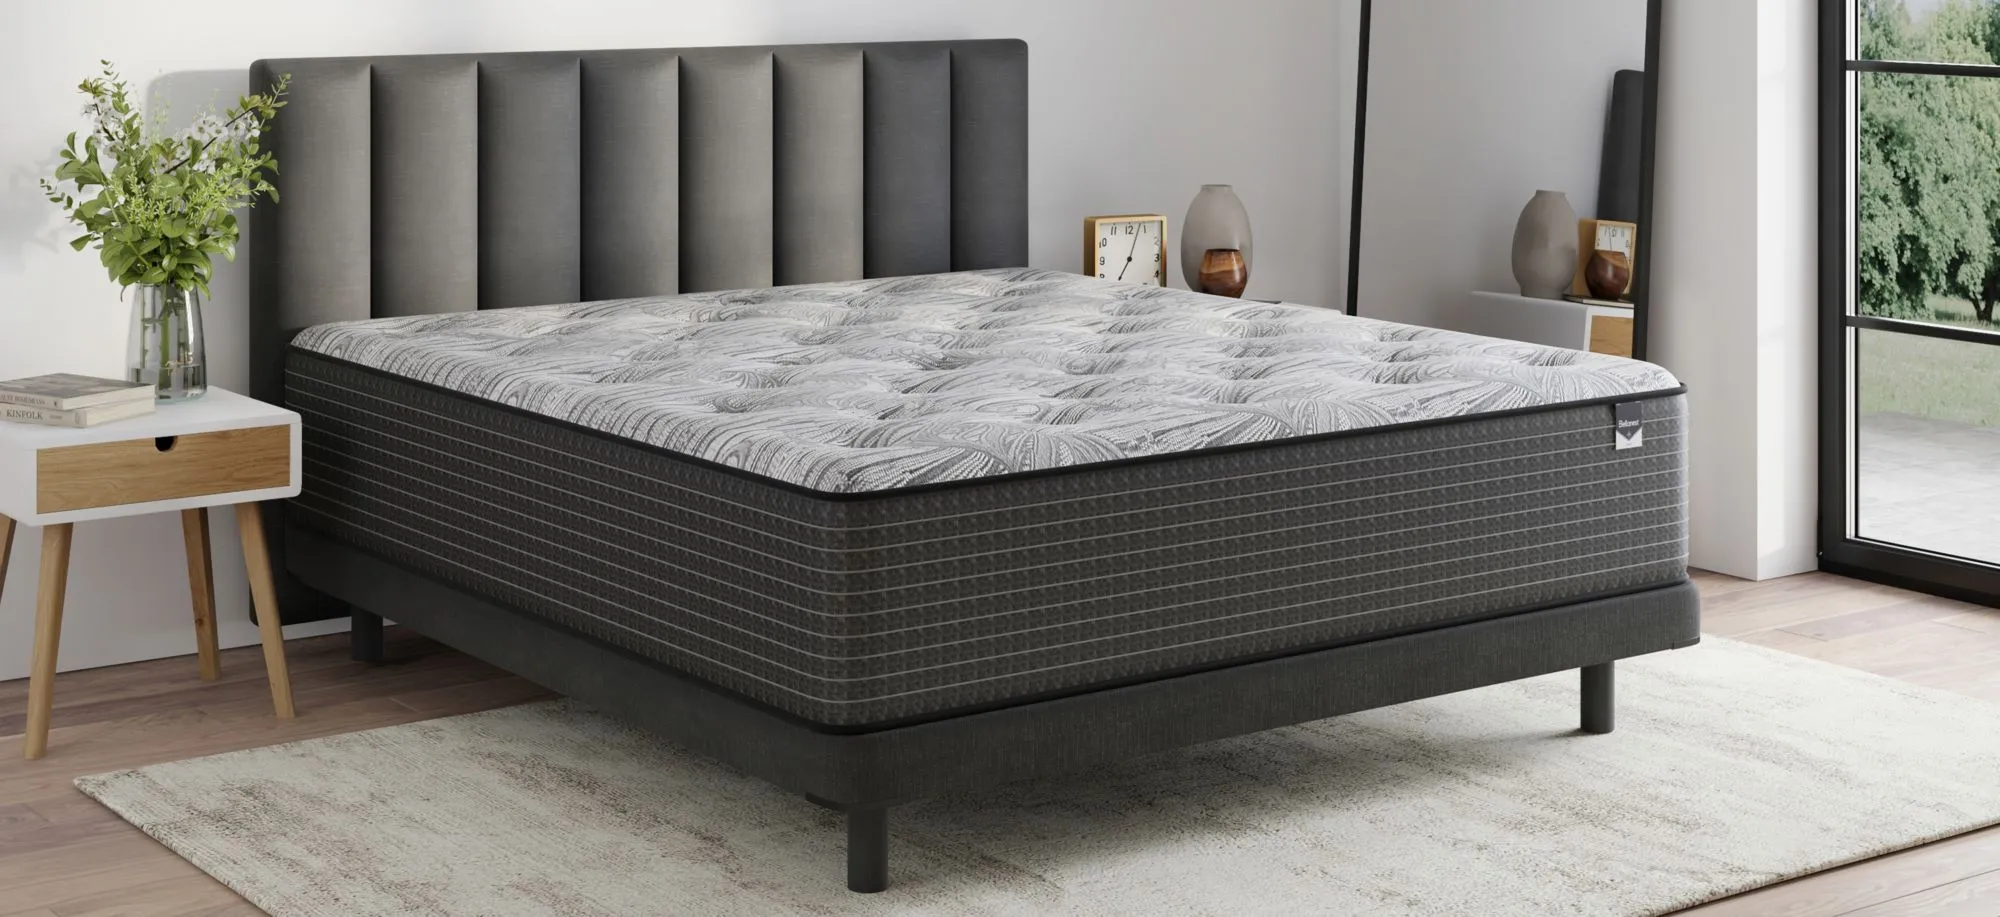 bellanest dahlia plush euro-top mattress